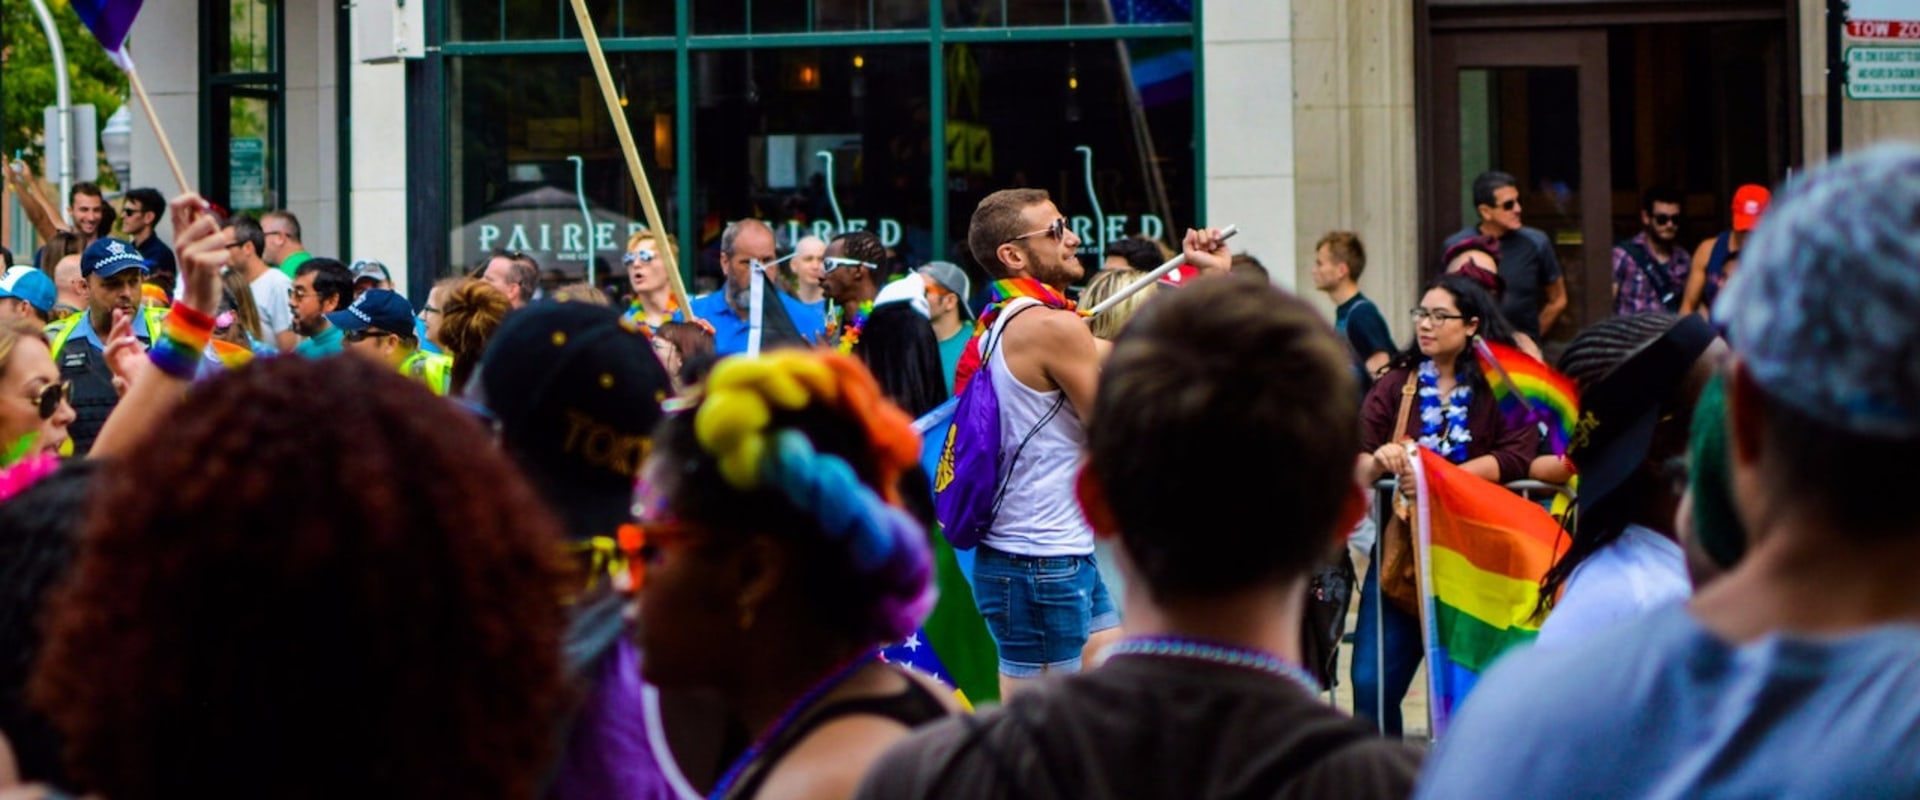 Embracing Diversity: The LGBT Landscape In Central Missouri